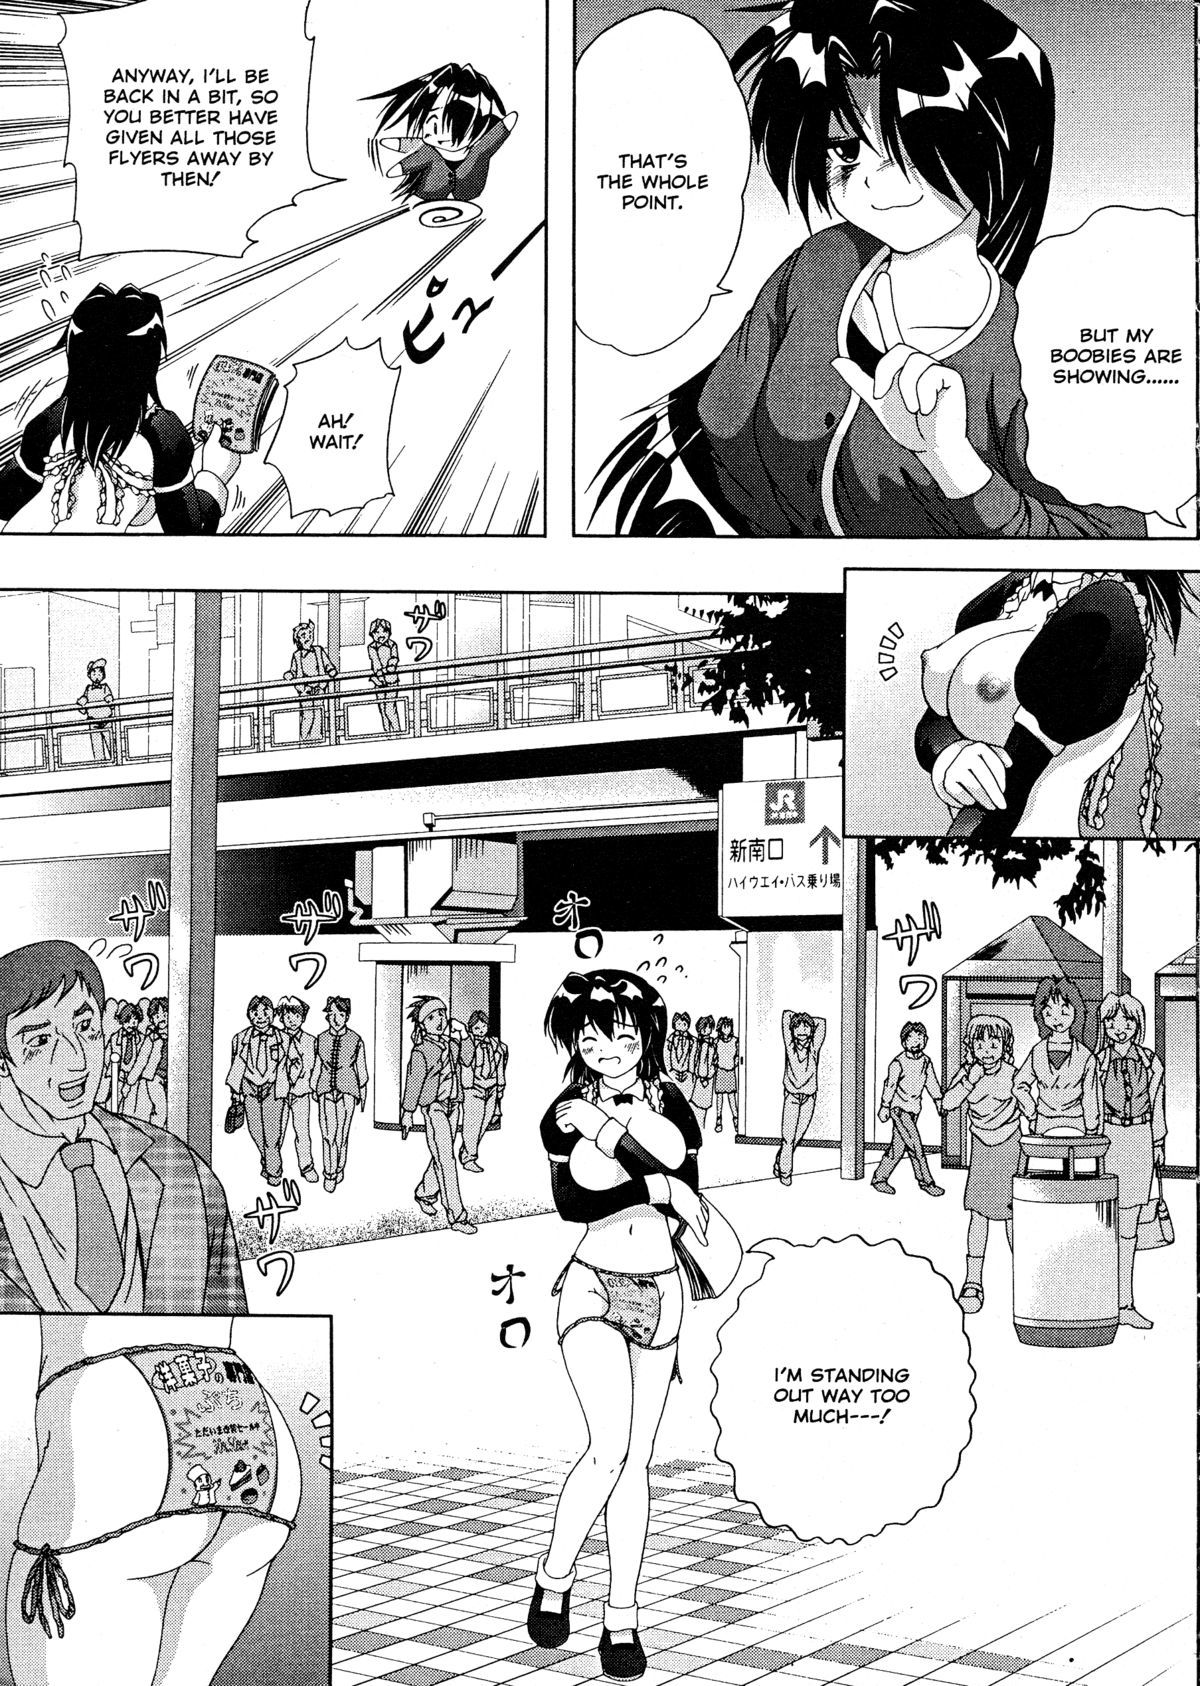 Flashbang!Hi-res 6 hentai manga